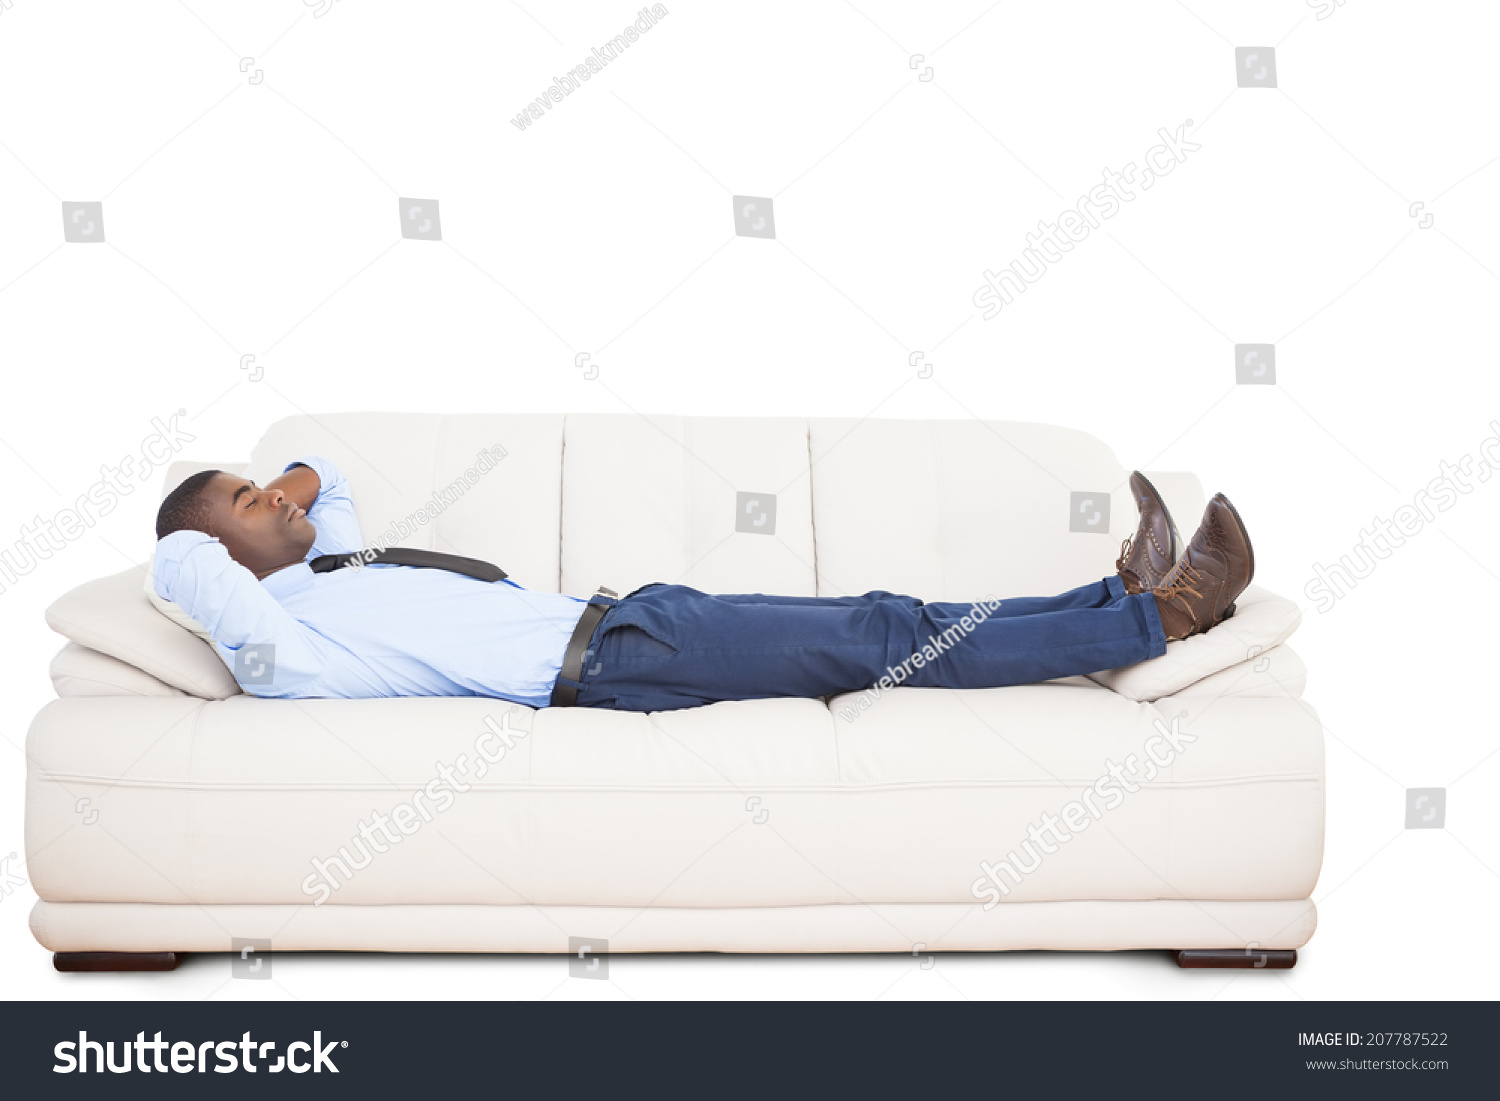 Лежат или лижат. Человек на диване. Человек лежит на диване. Пульт лежит на диване. Худой лежащий человек на диване.